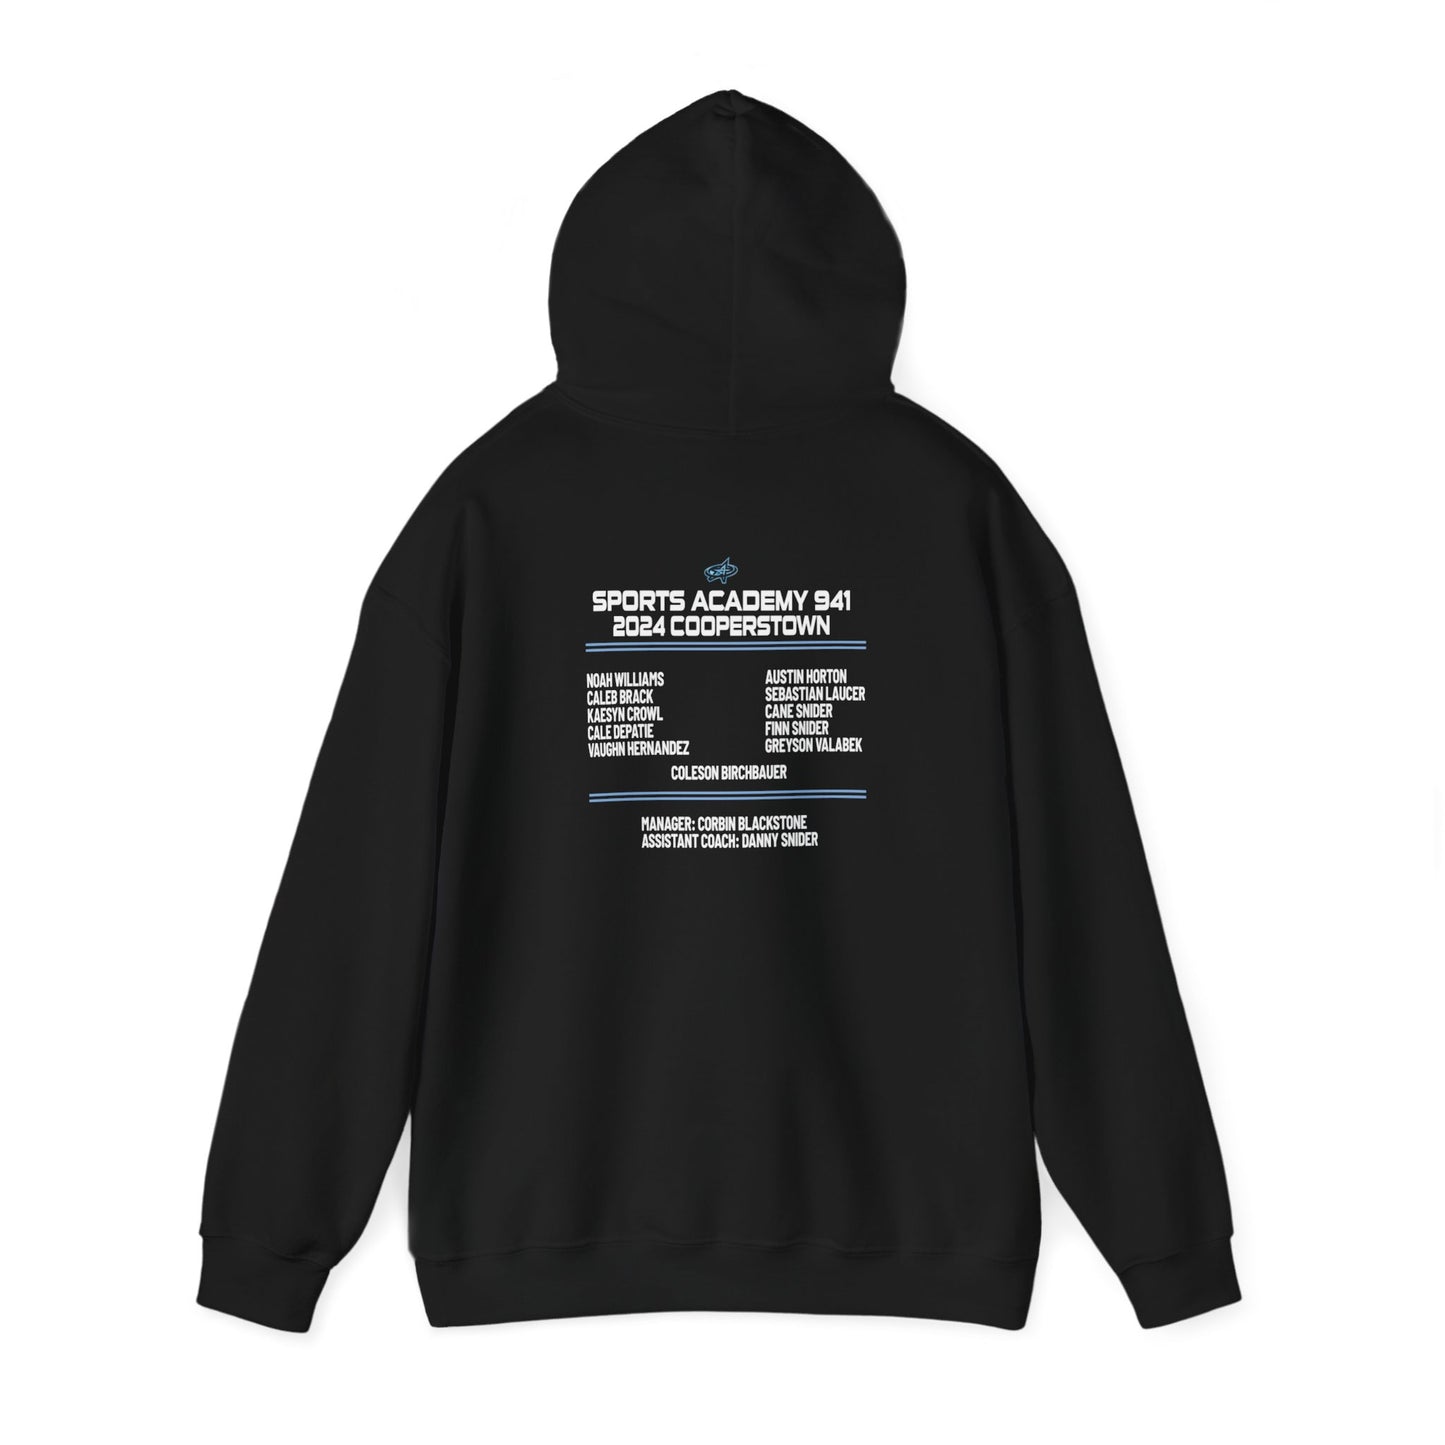 Cooperstown hoodie - unisex